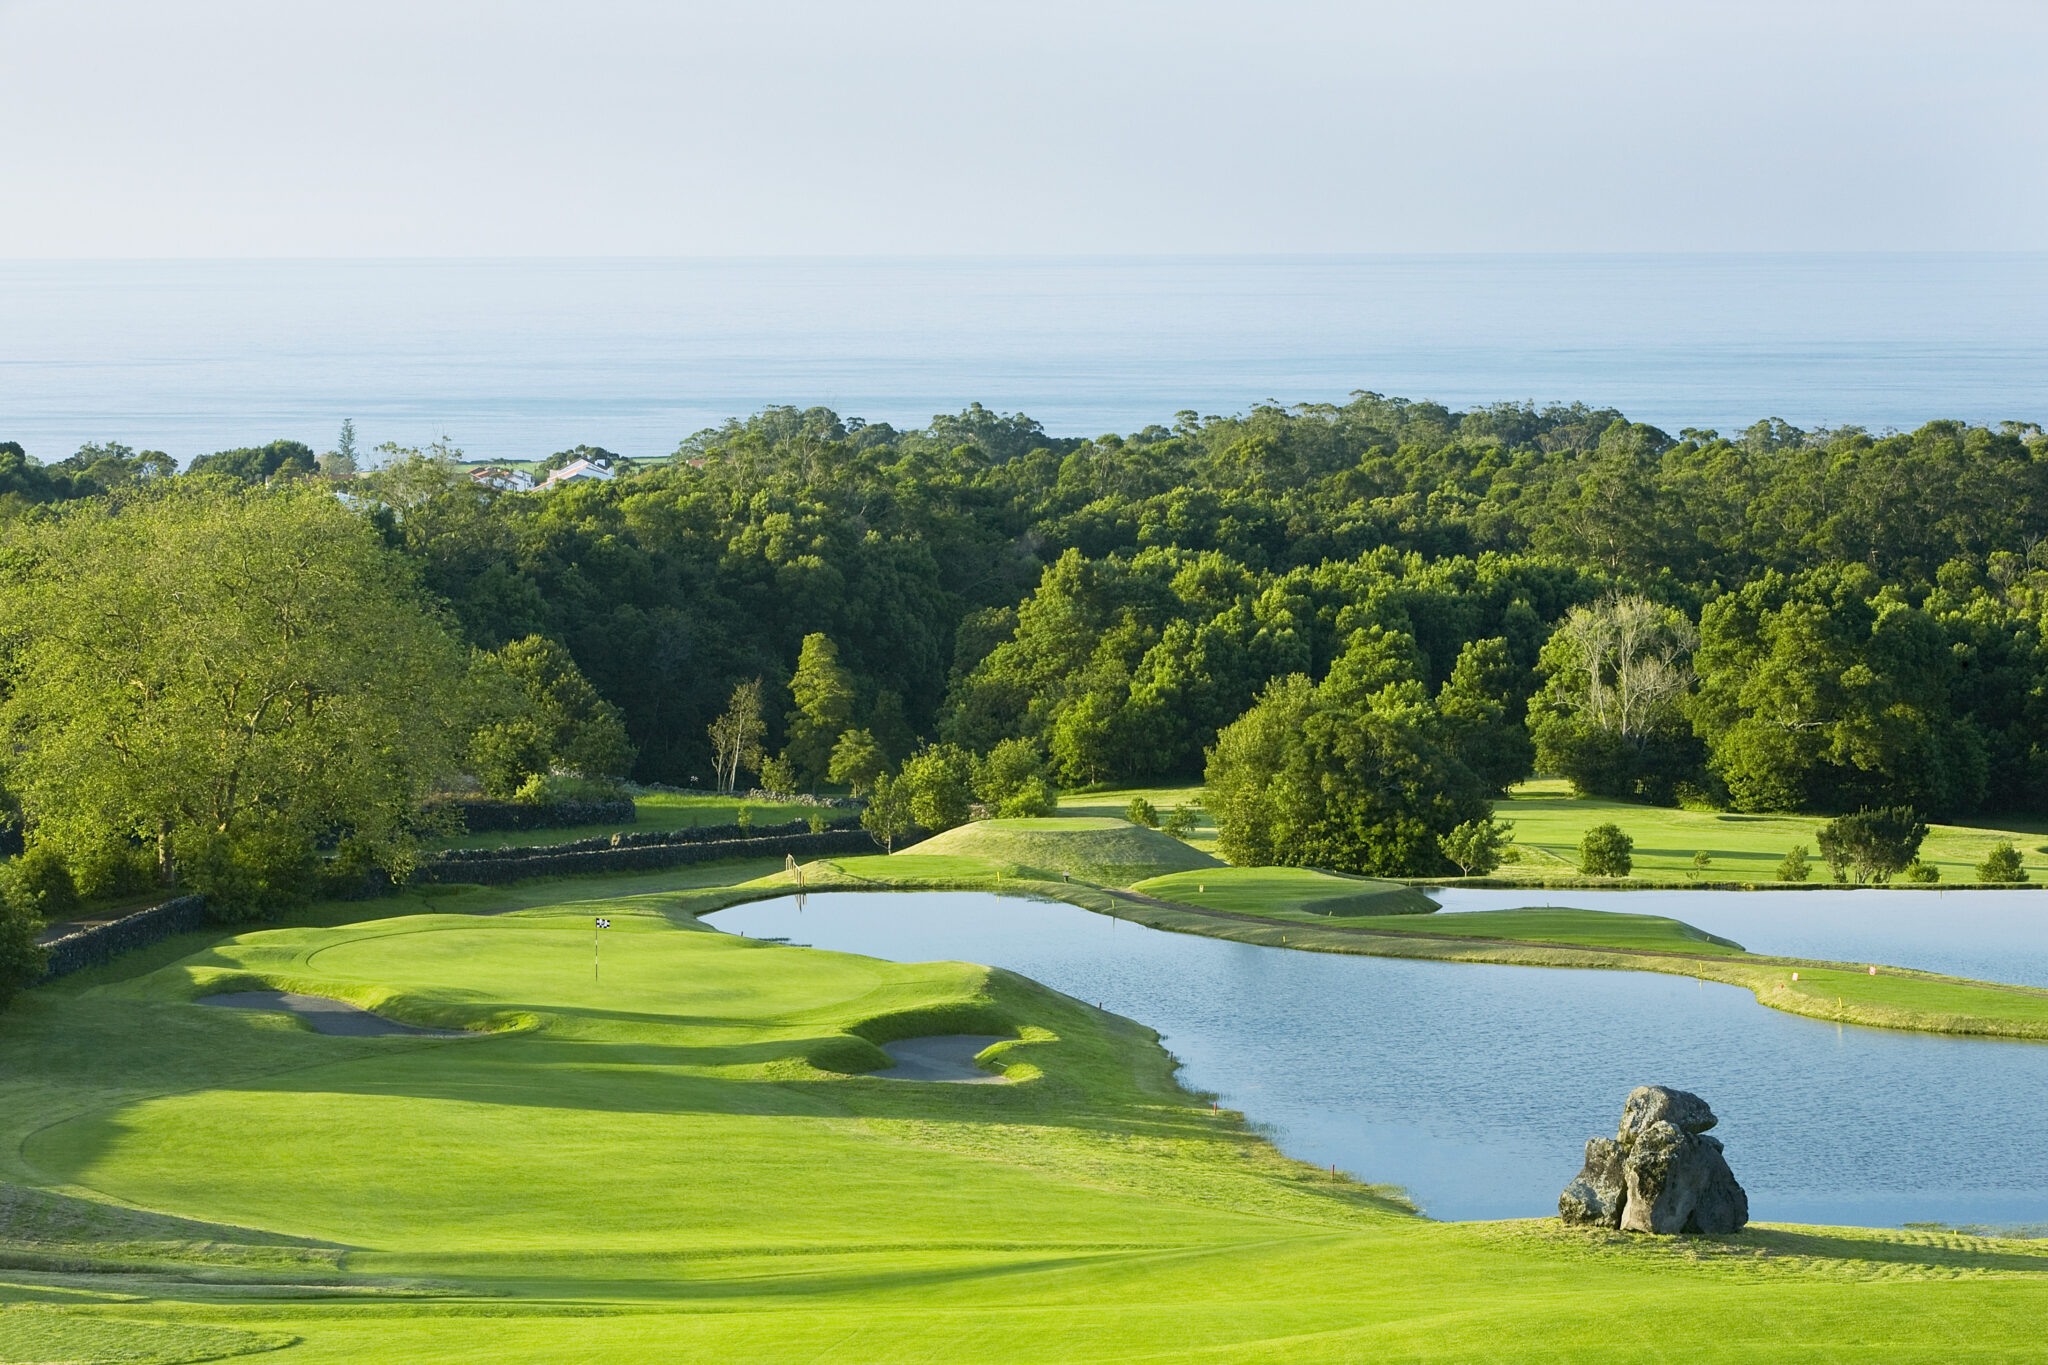 PGE l Batalha Golf Club l Hole #4 with ocean view